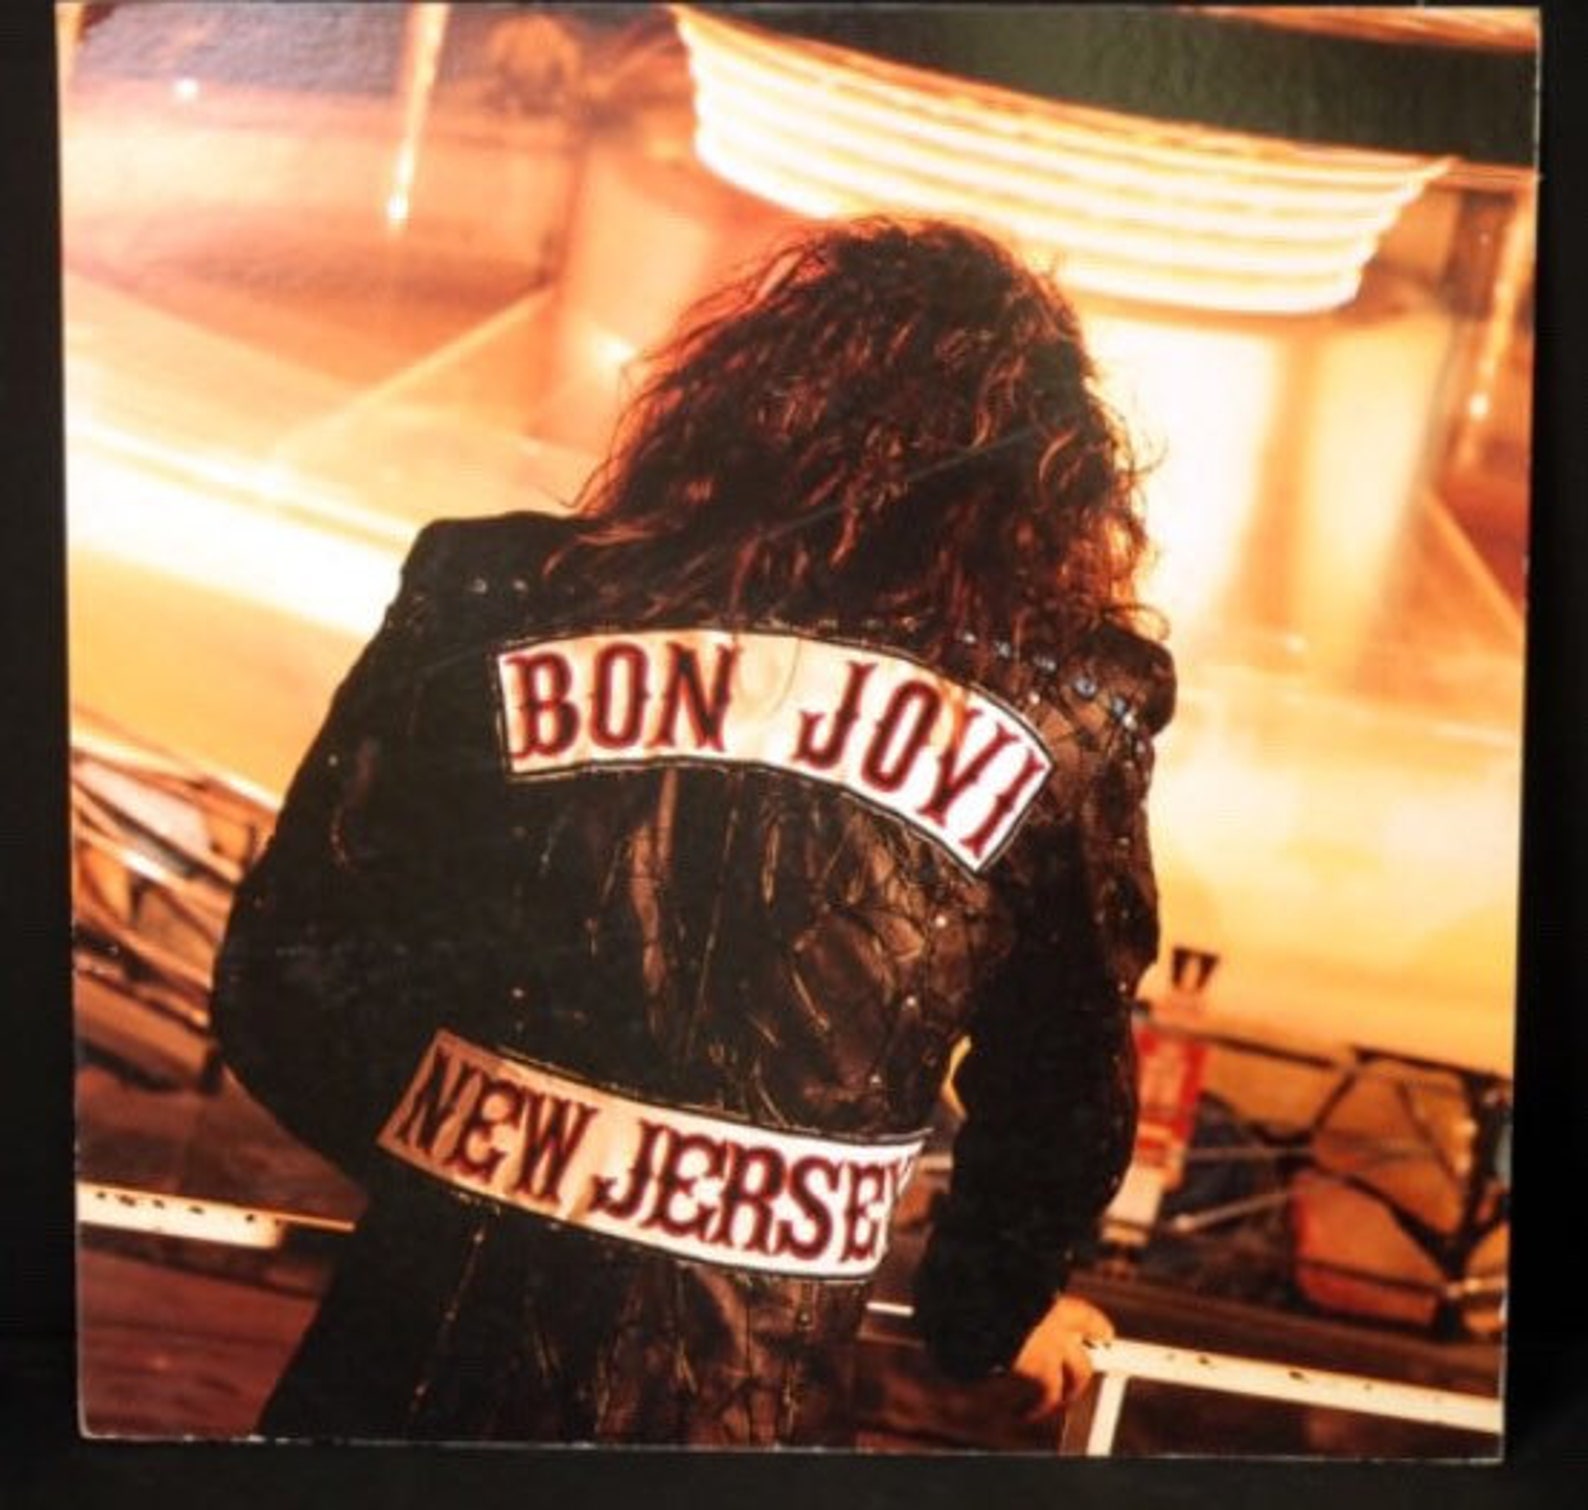 New jersey bon jovi. Бон Джови Нью джерси. Bon Jovi 1988. Bon Jovi 1988 New Jersey CD. LP bon Jovi: New Jersey.